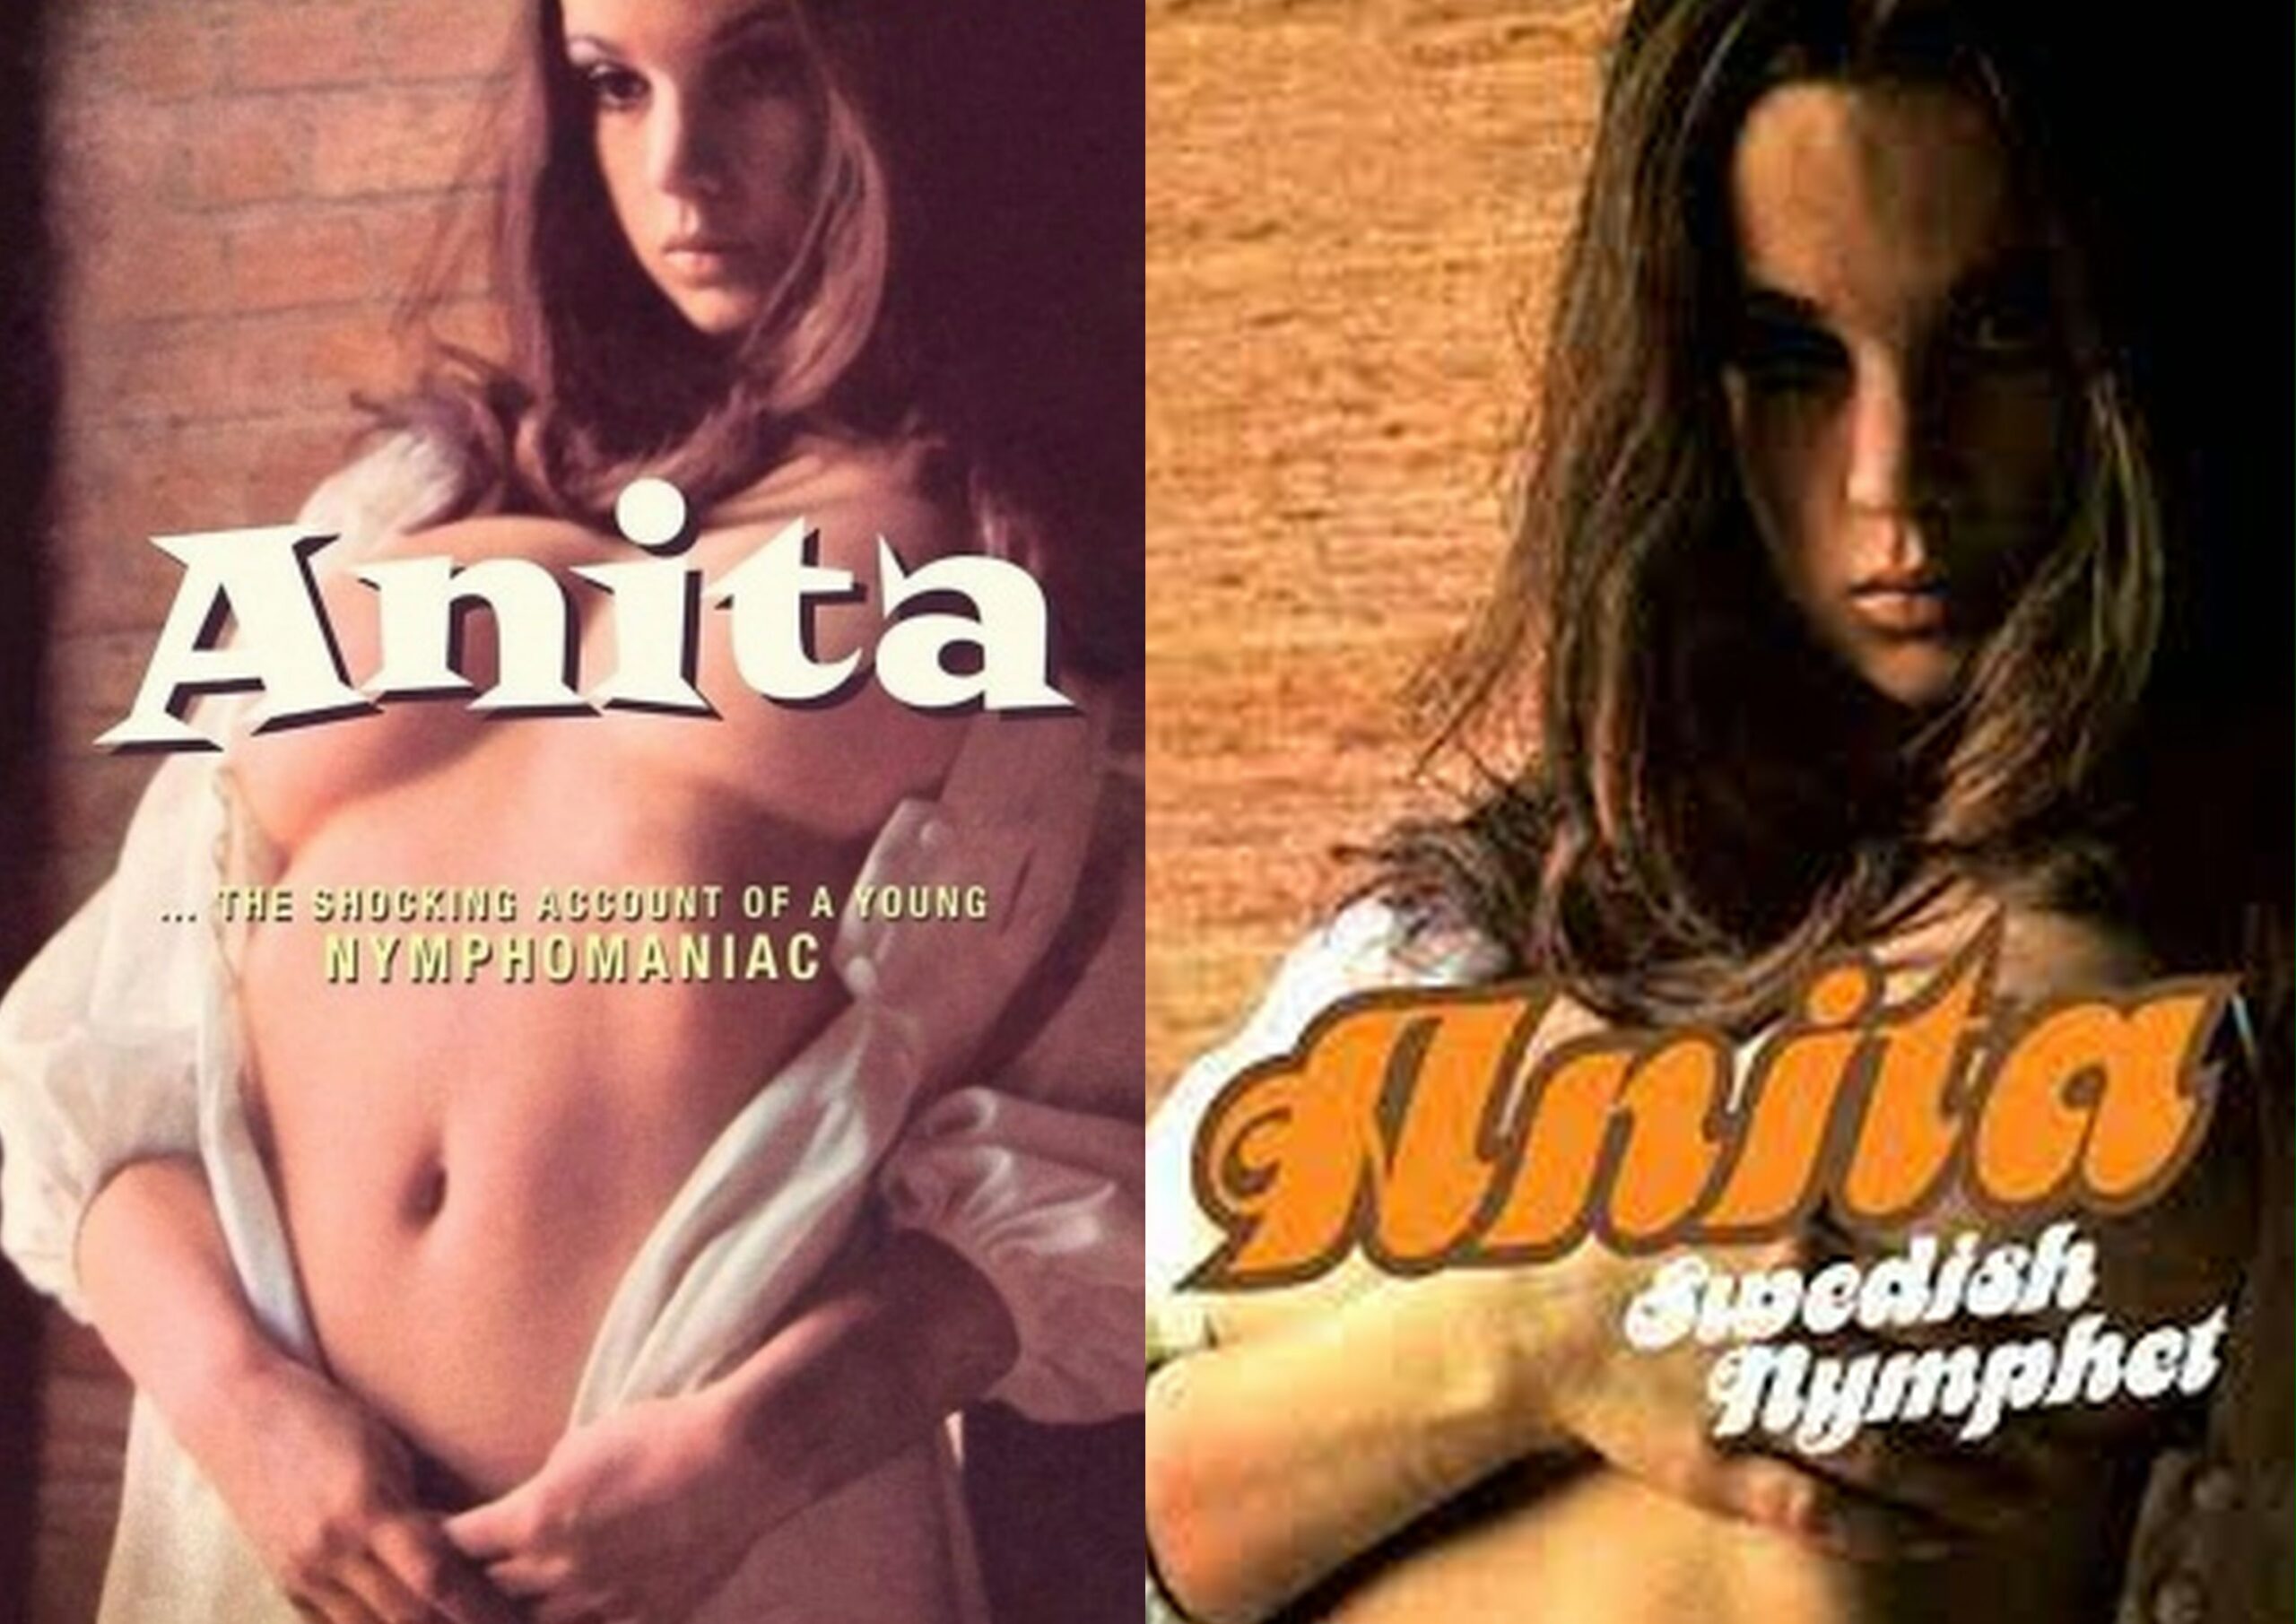 Swedish erotic films